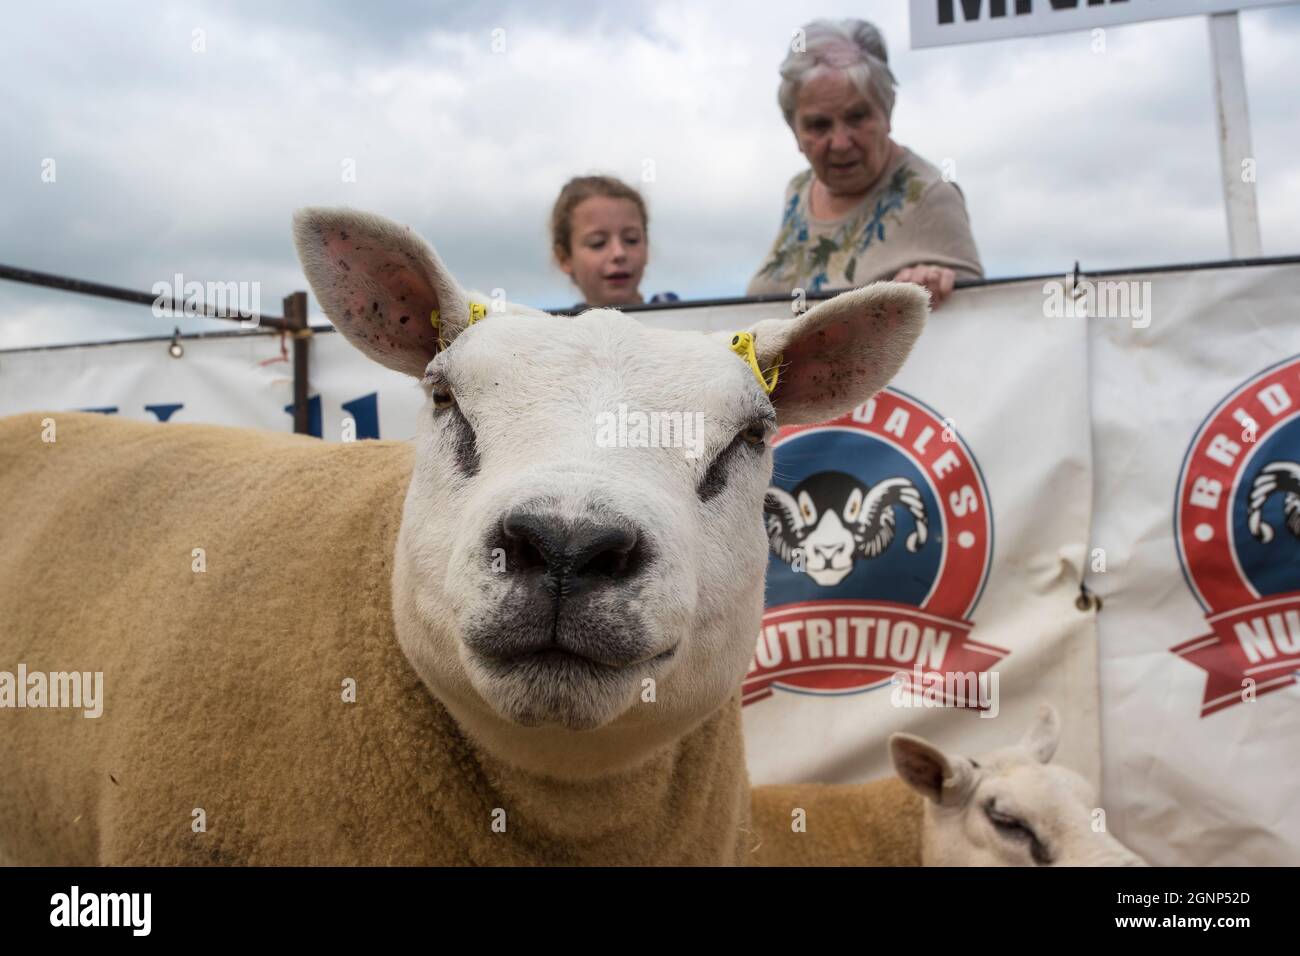 Texel Sheep in PEN, Appleby show, Appleby-in-Westmorland, Cumbria Foto Stock